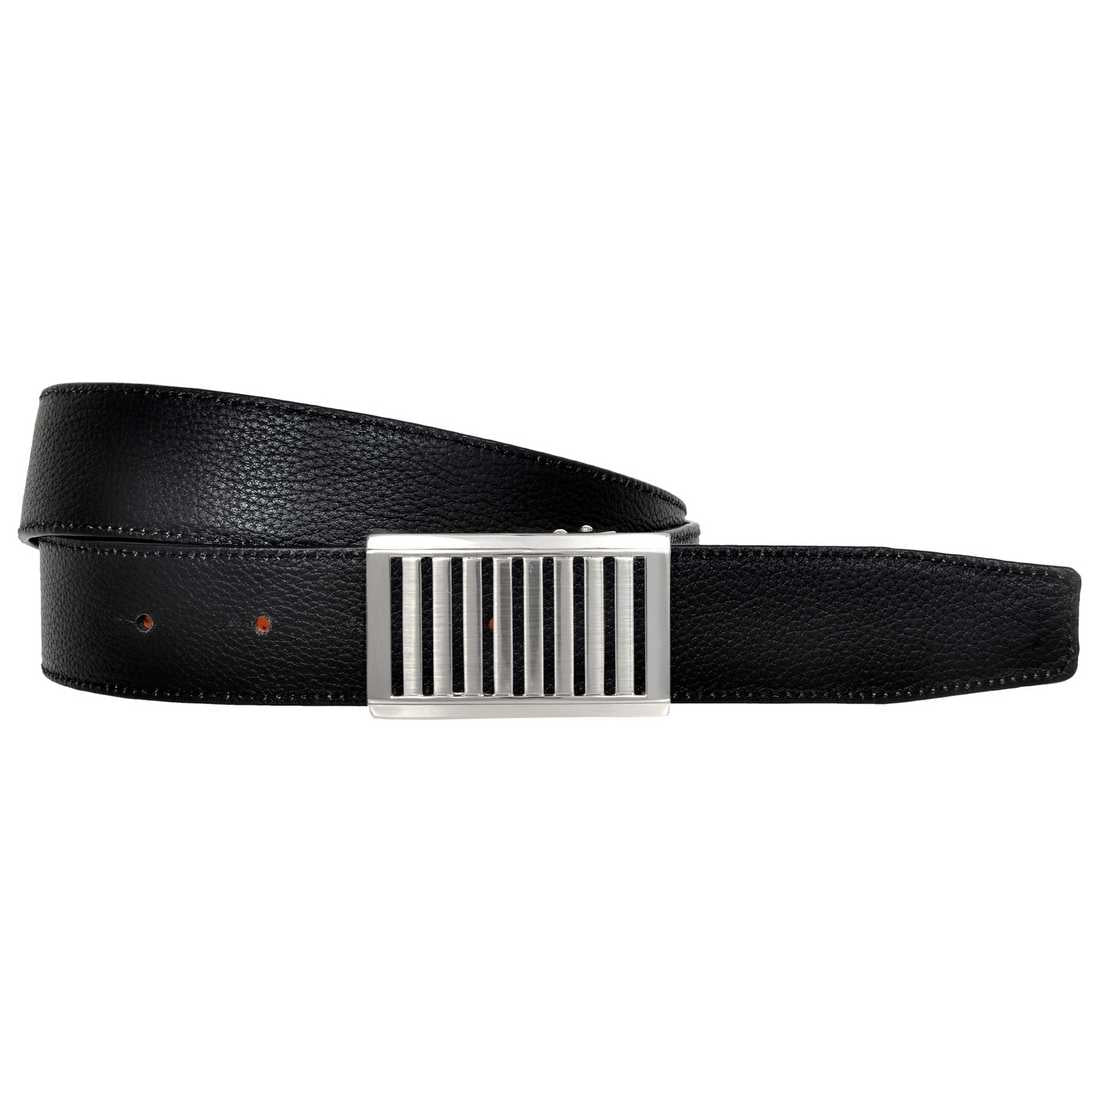 OHM New York Latticed Buckle Leather Handmade Reversible Belts Black/Brown